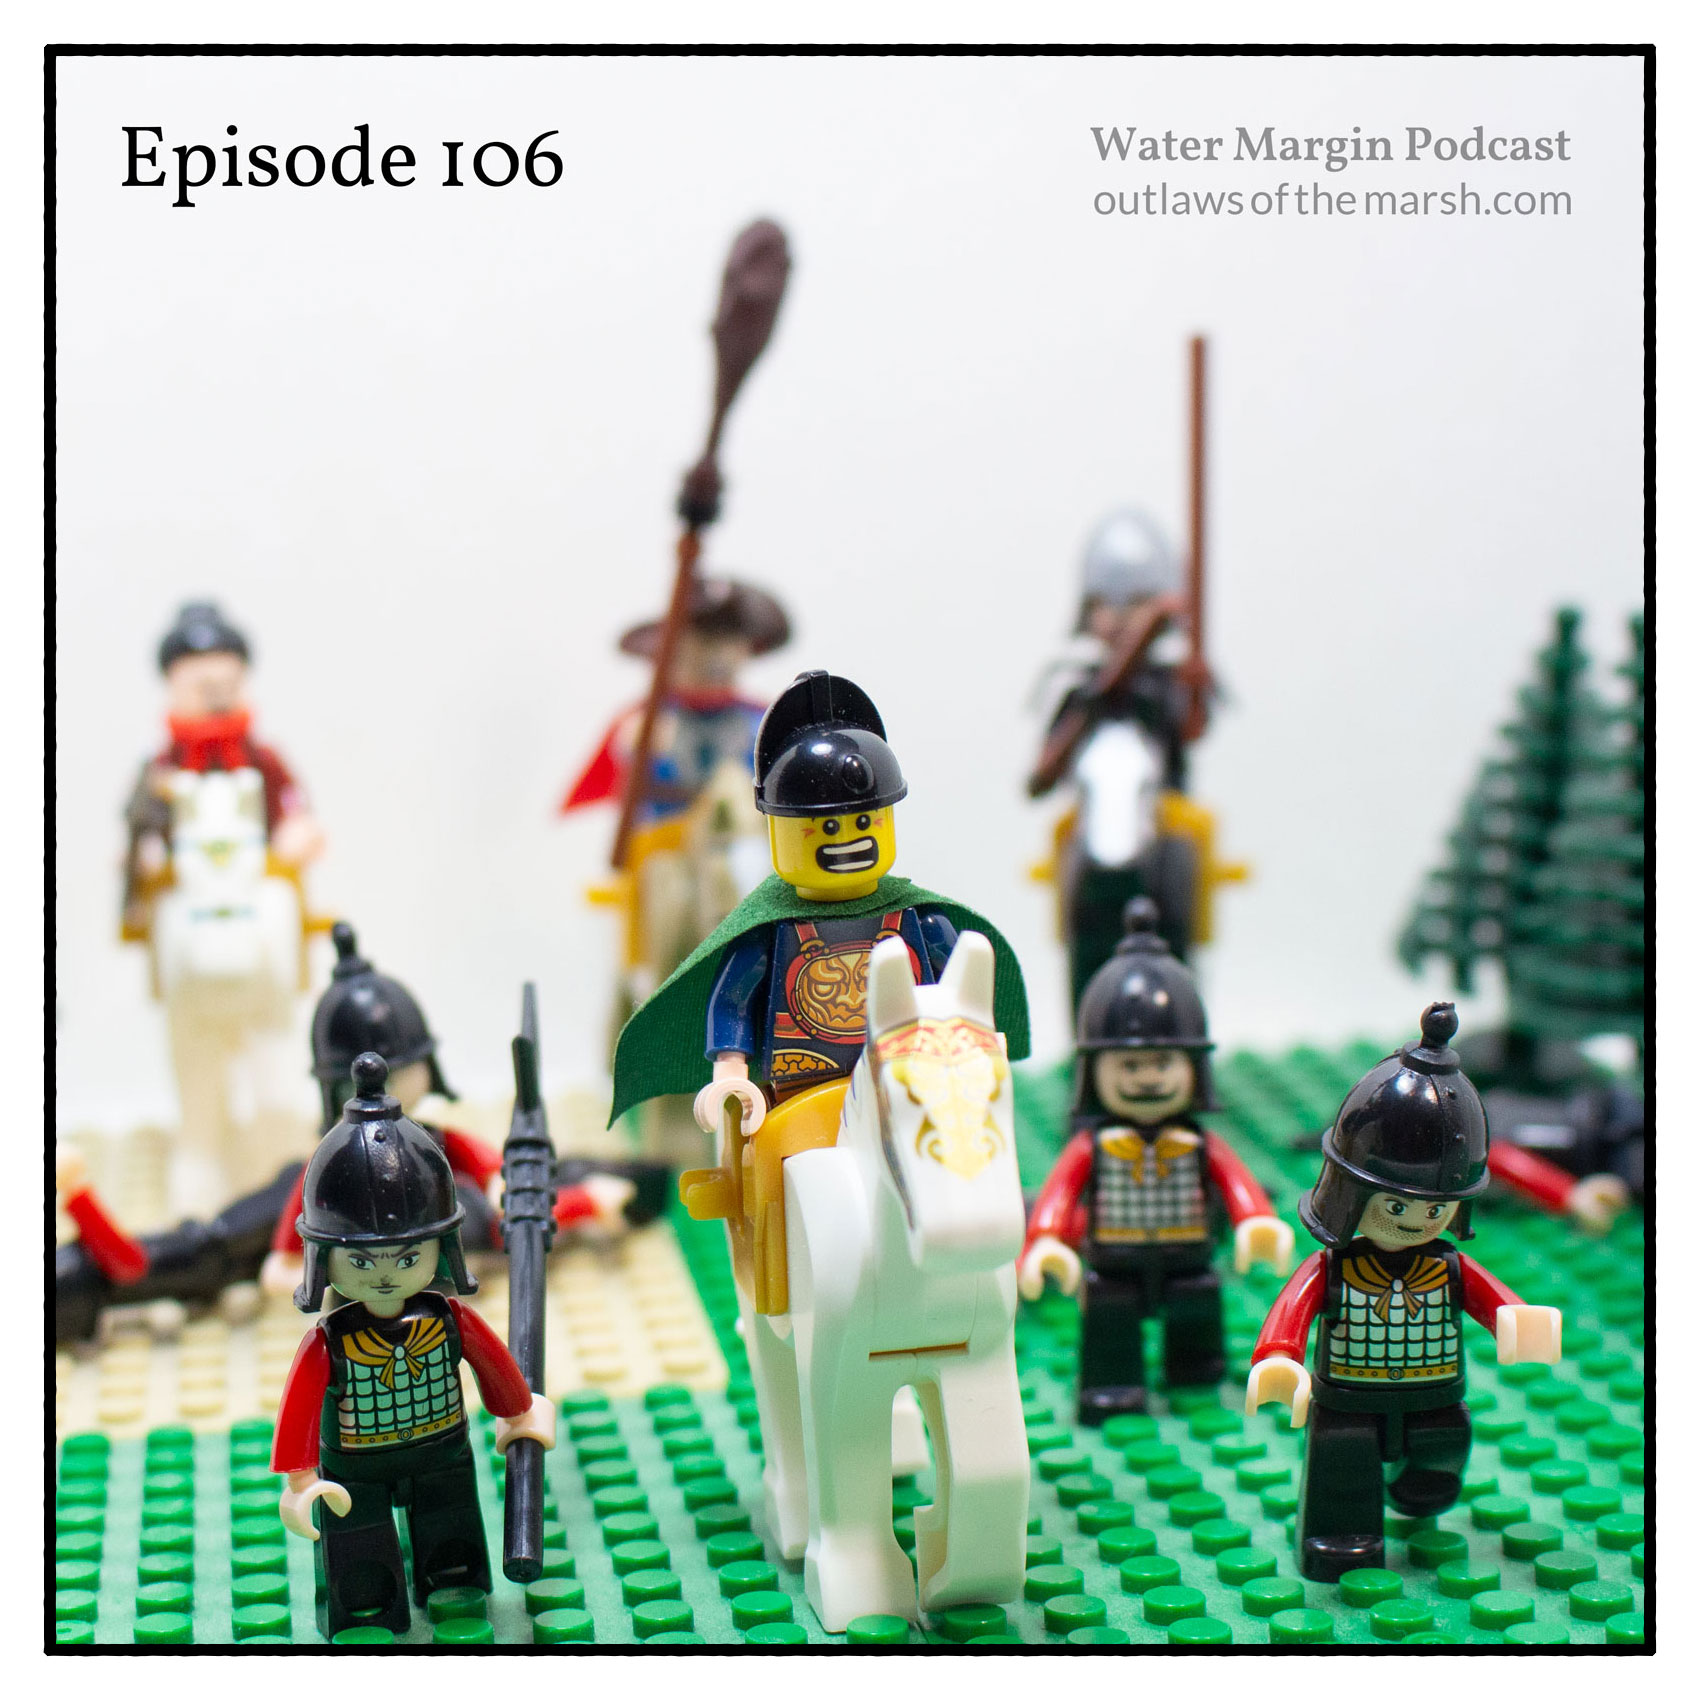 Water Margin Podcast: Episode 106